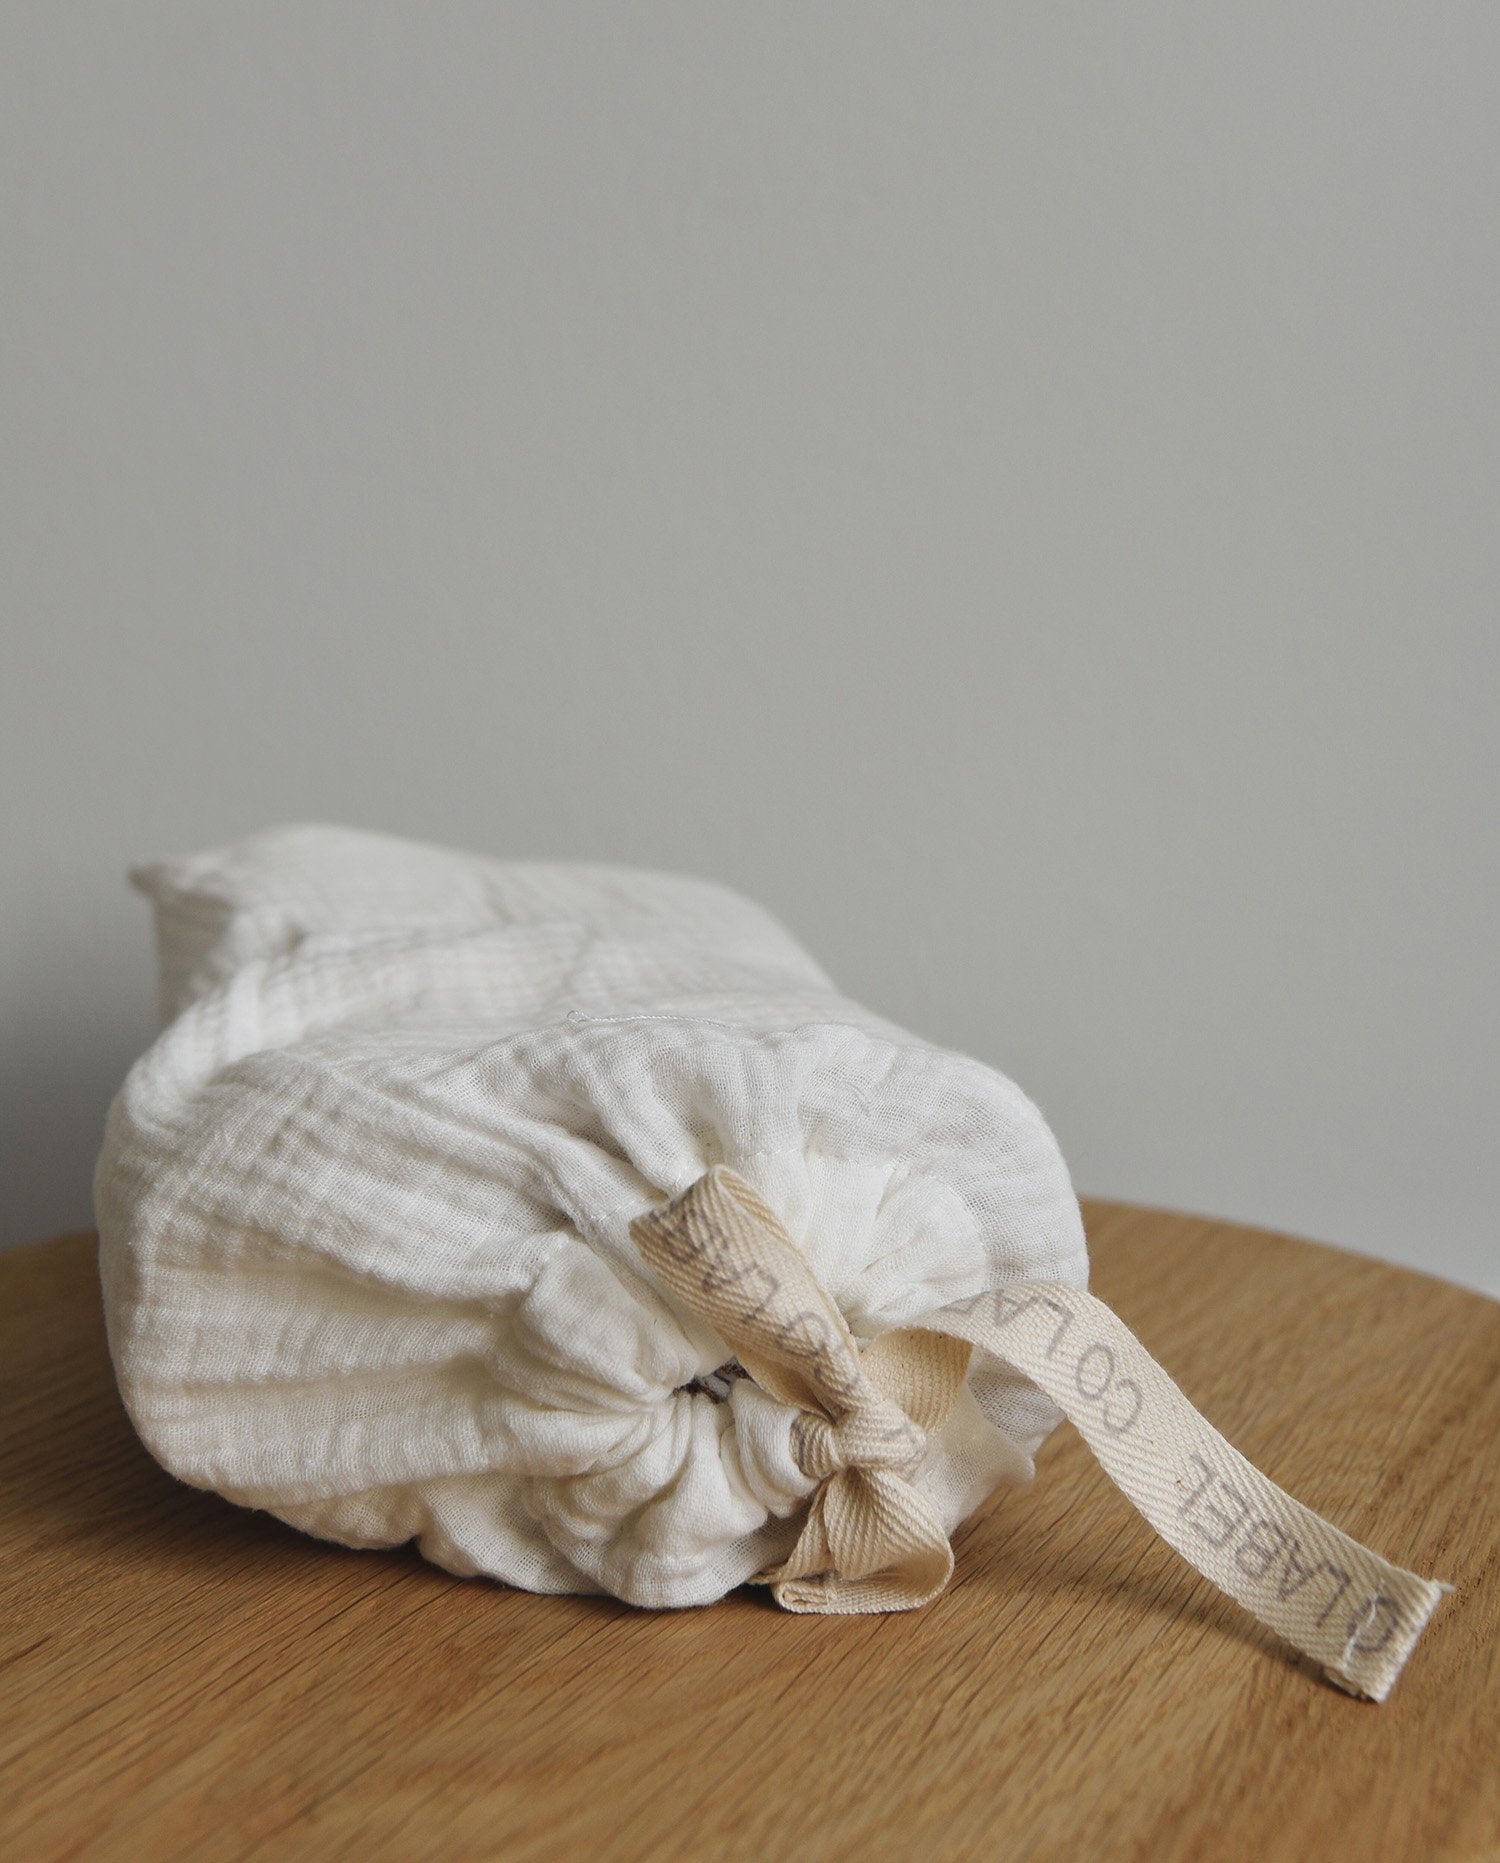 Muslin swaddle organic cotton baby